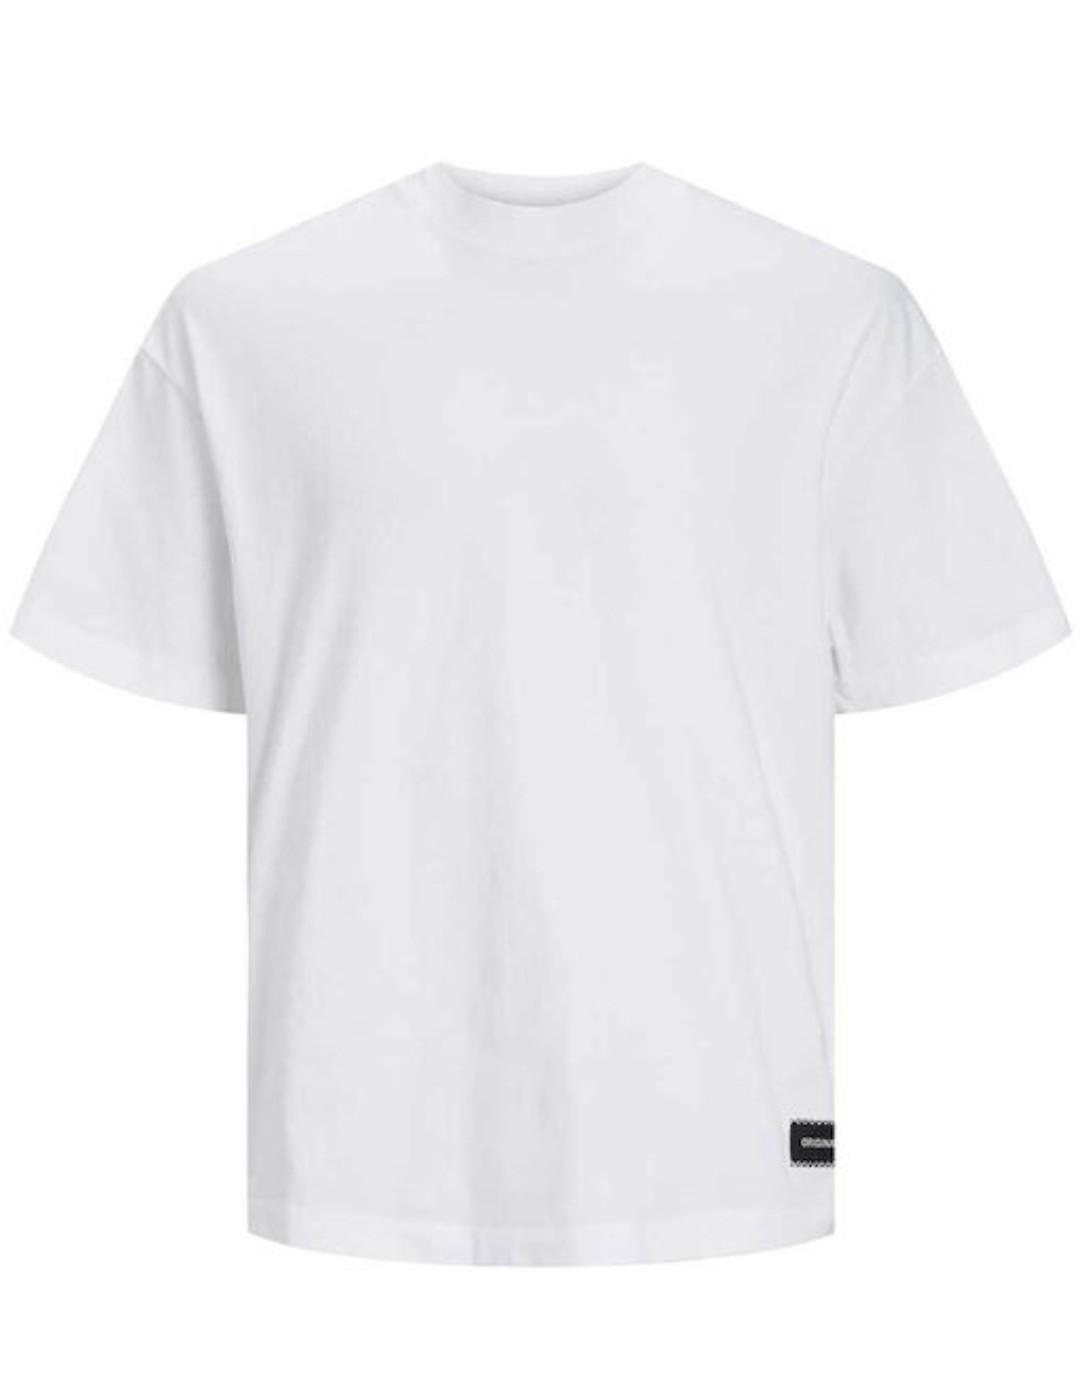 Camiseta Jack&Jones Grand blanco manga corta para hombre